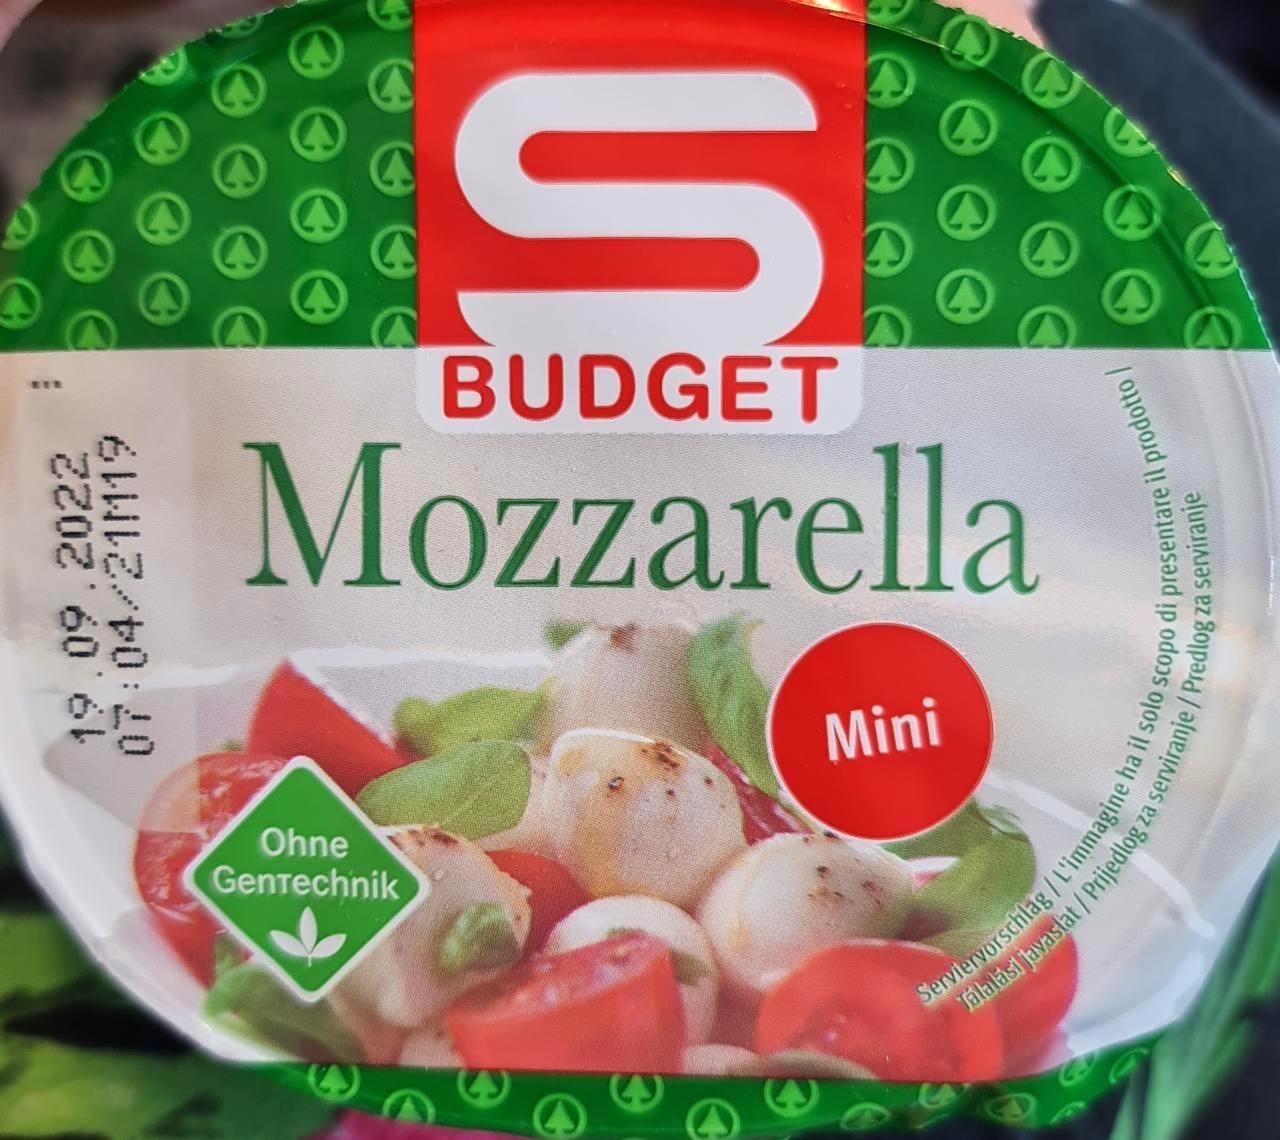 Képek - Mini mozzarella S Budget